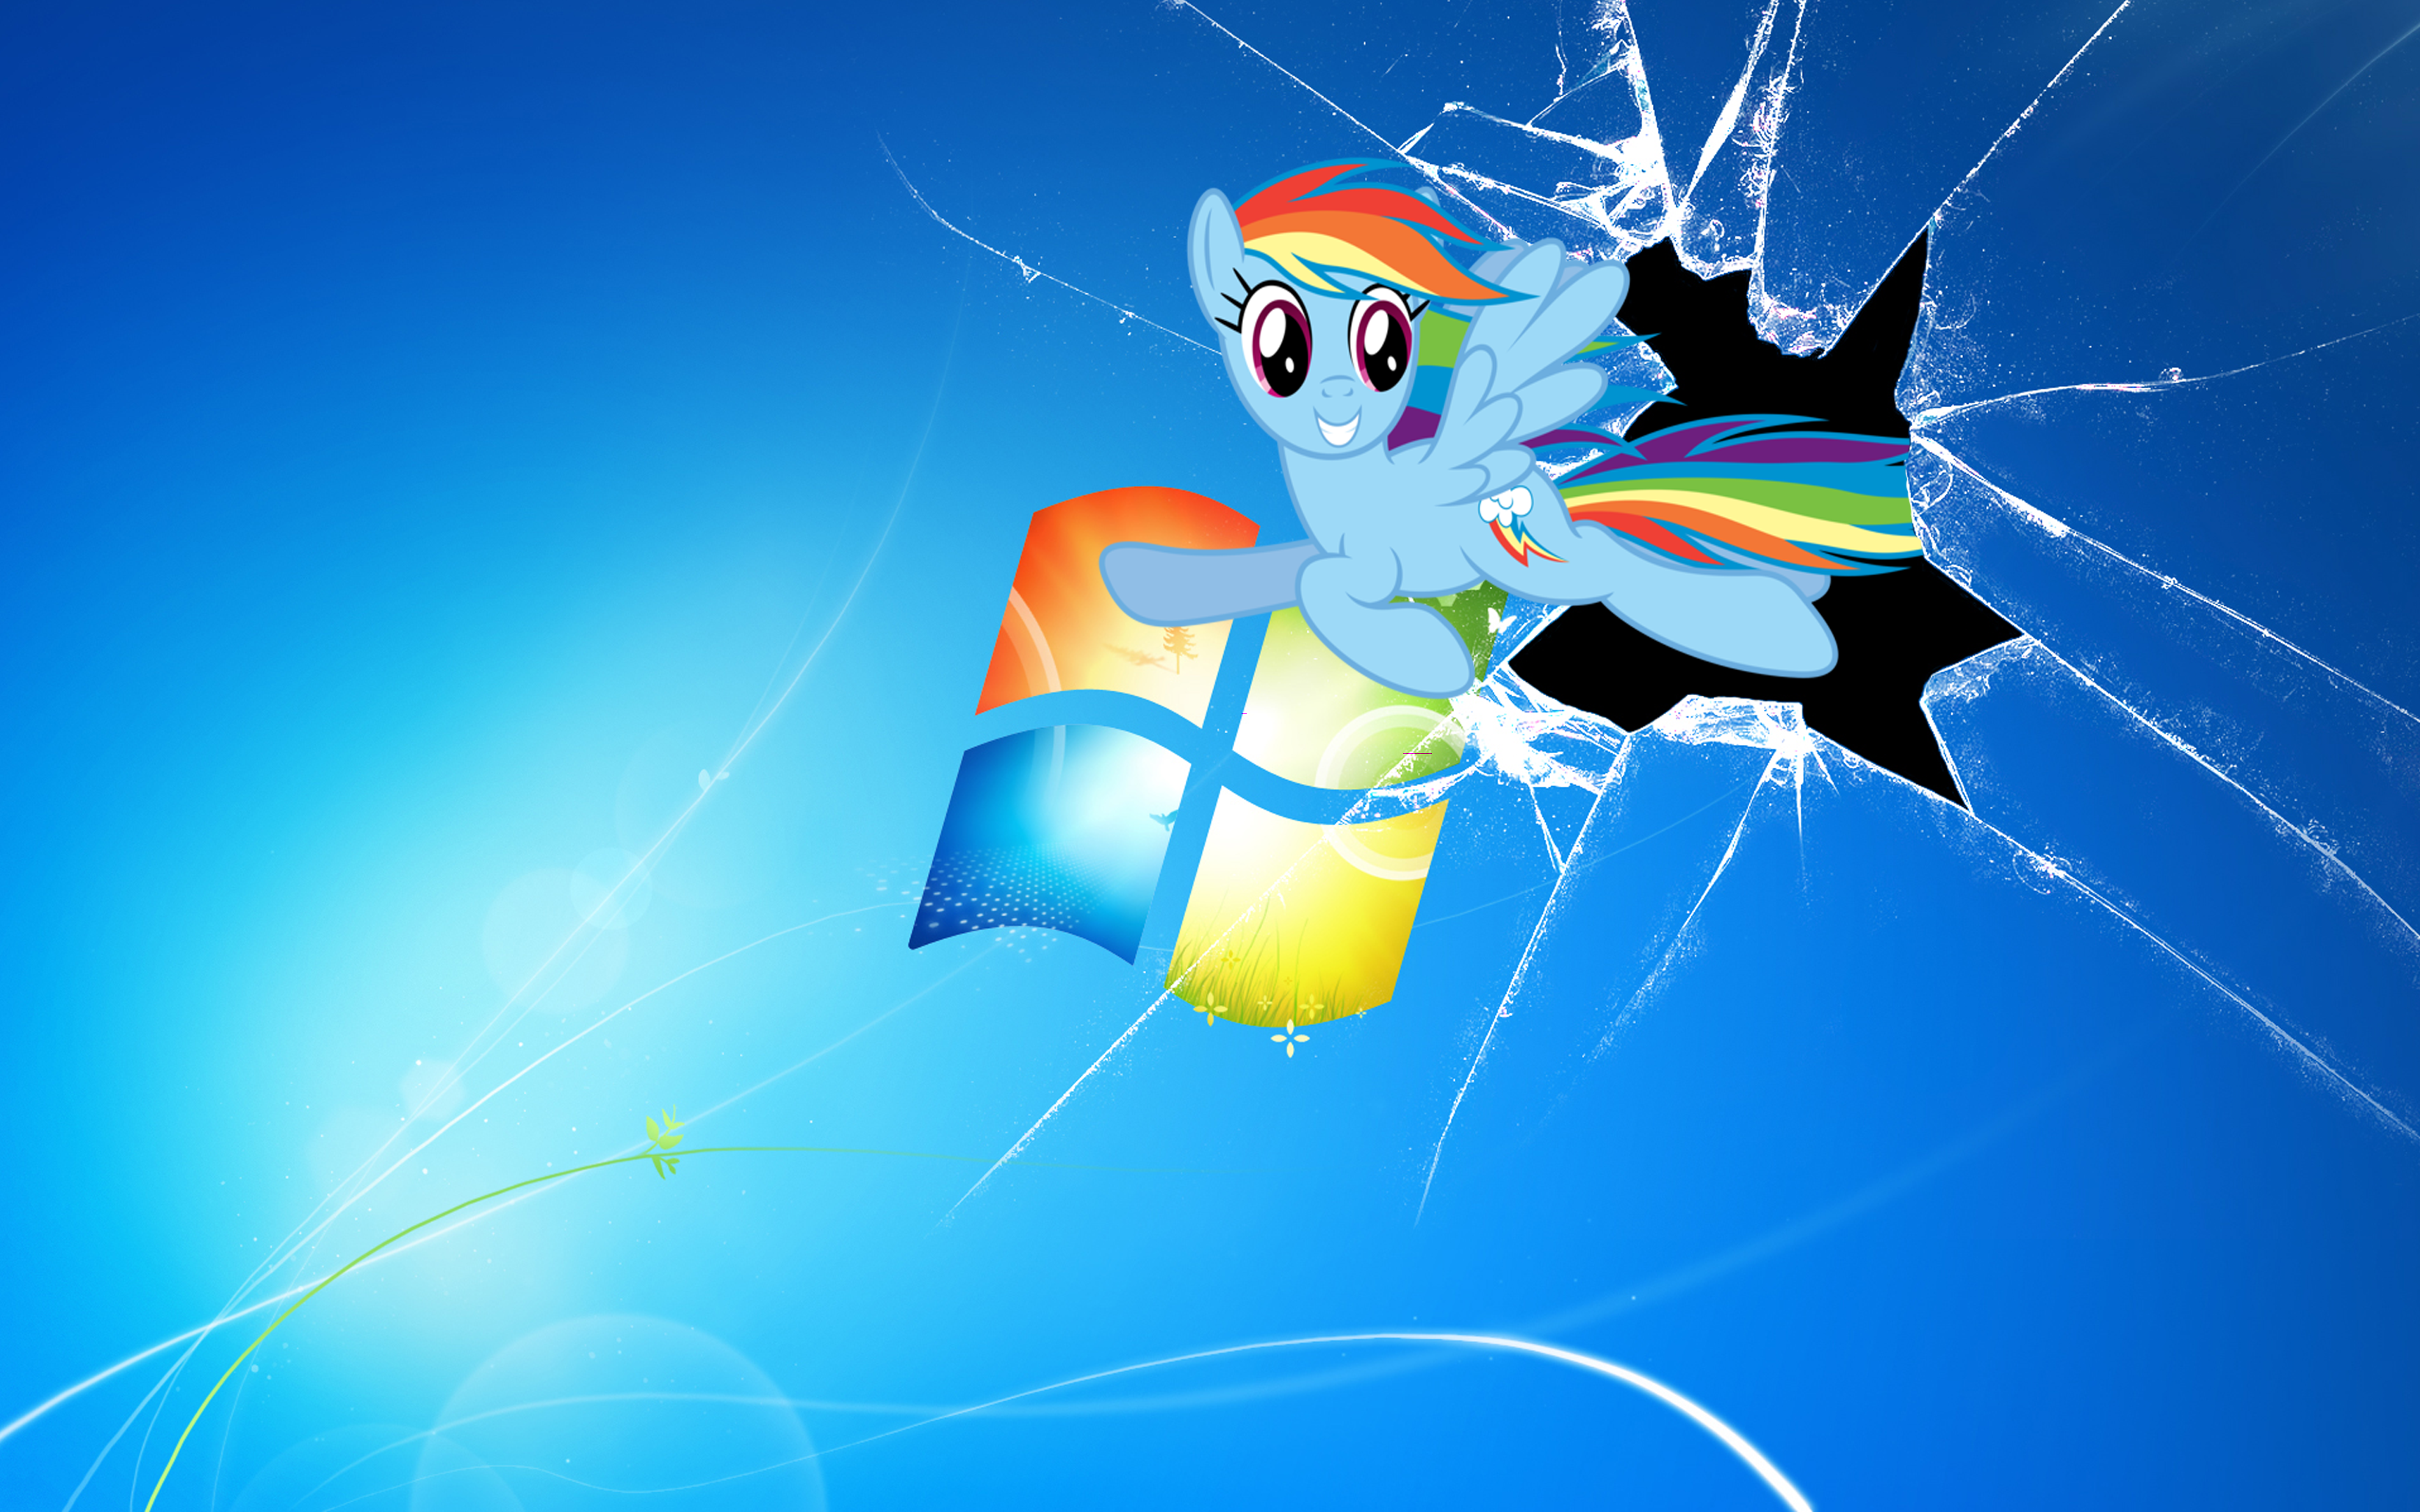 Cracked Screen Wallpaper Windows 8 Rainbowdash windows wallpaper